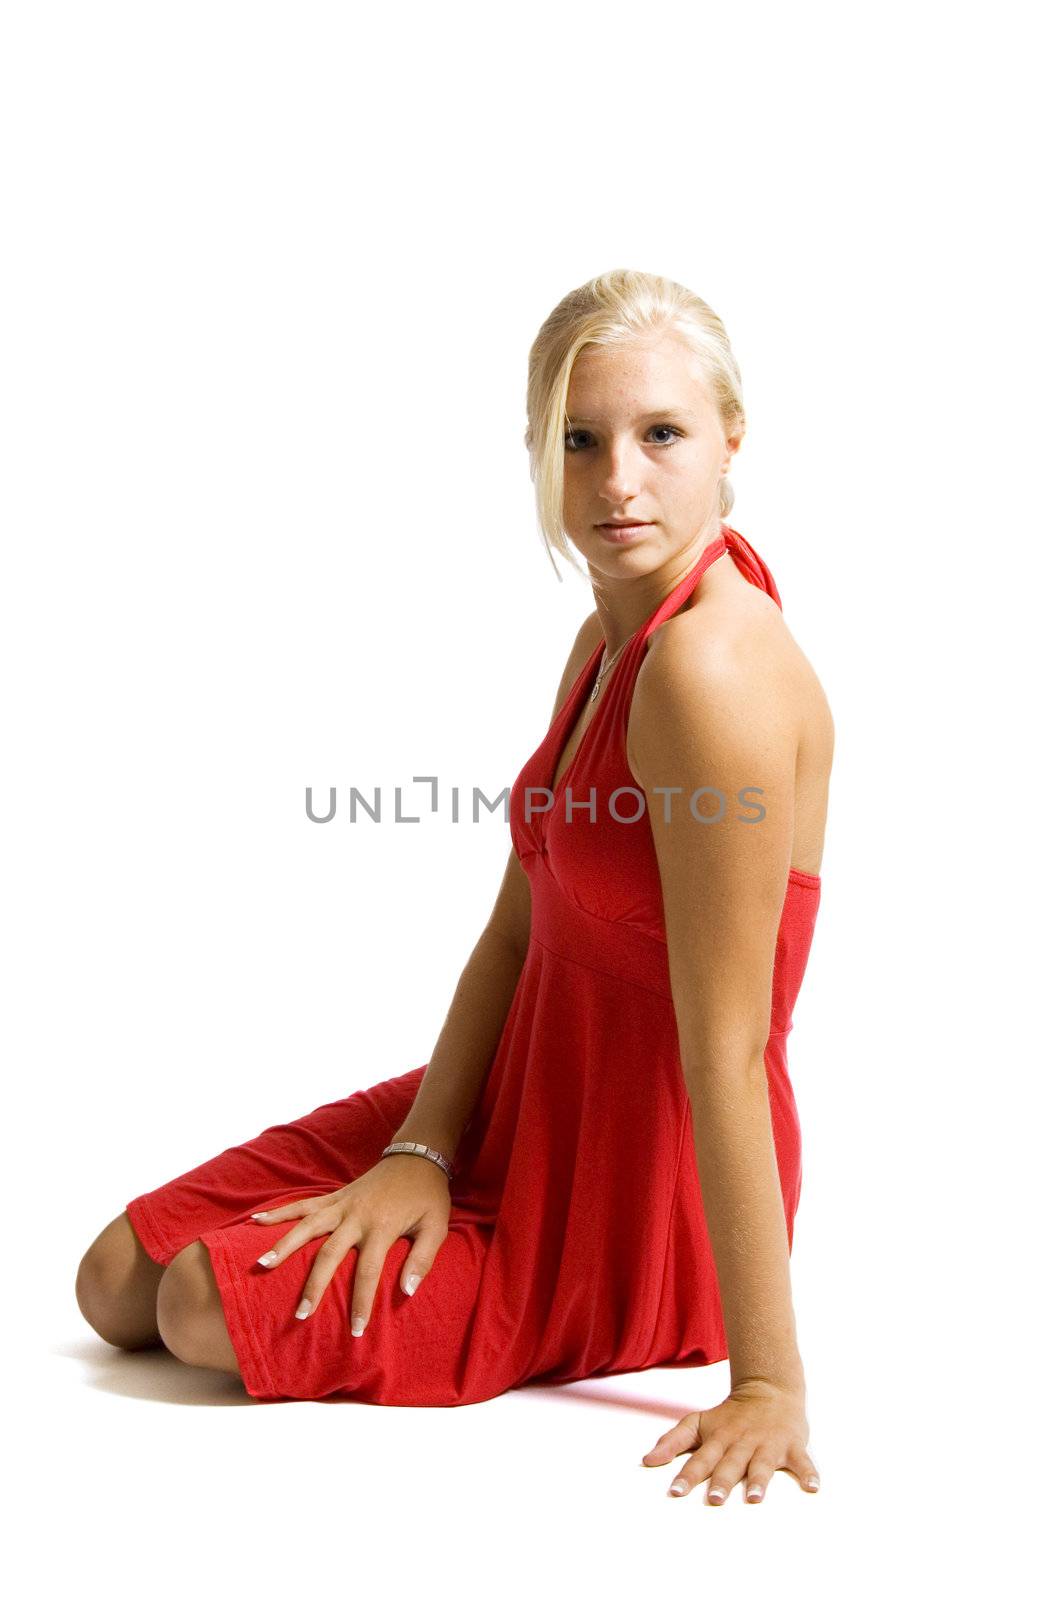 beuatiful blonde teenage girl sitting on floor in red dress by ladyminnie